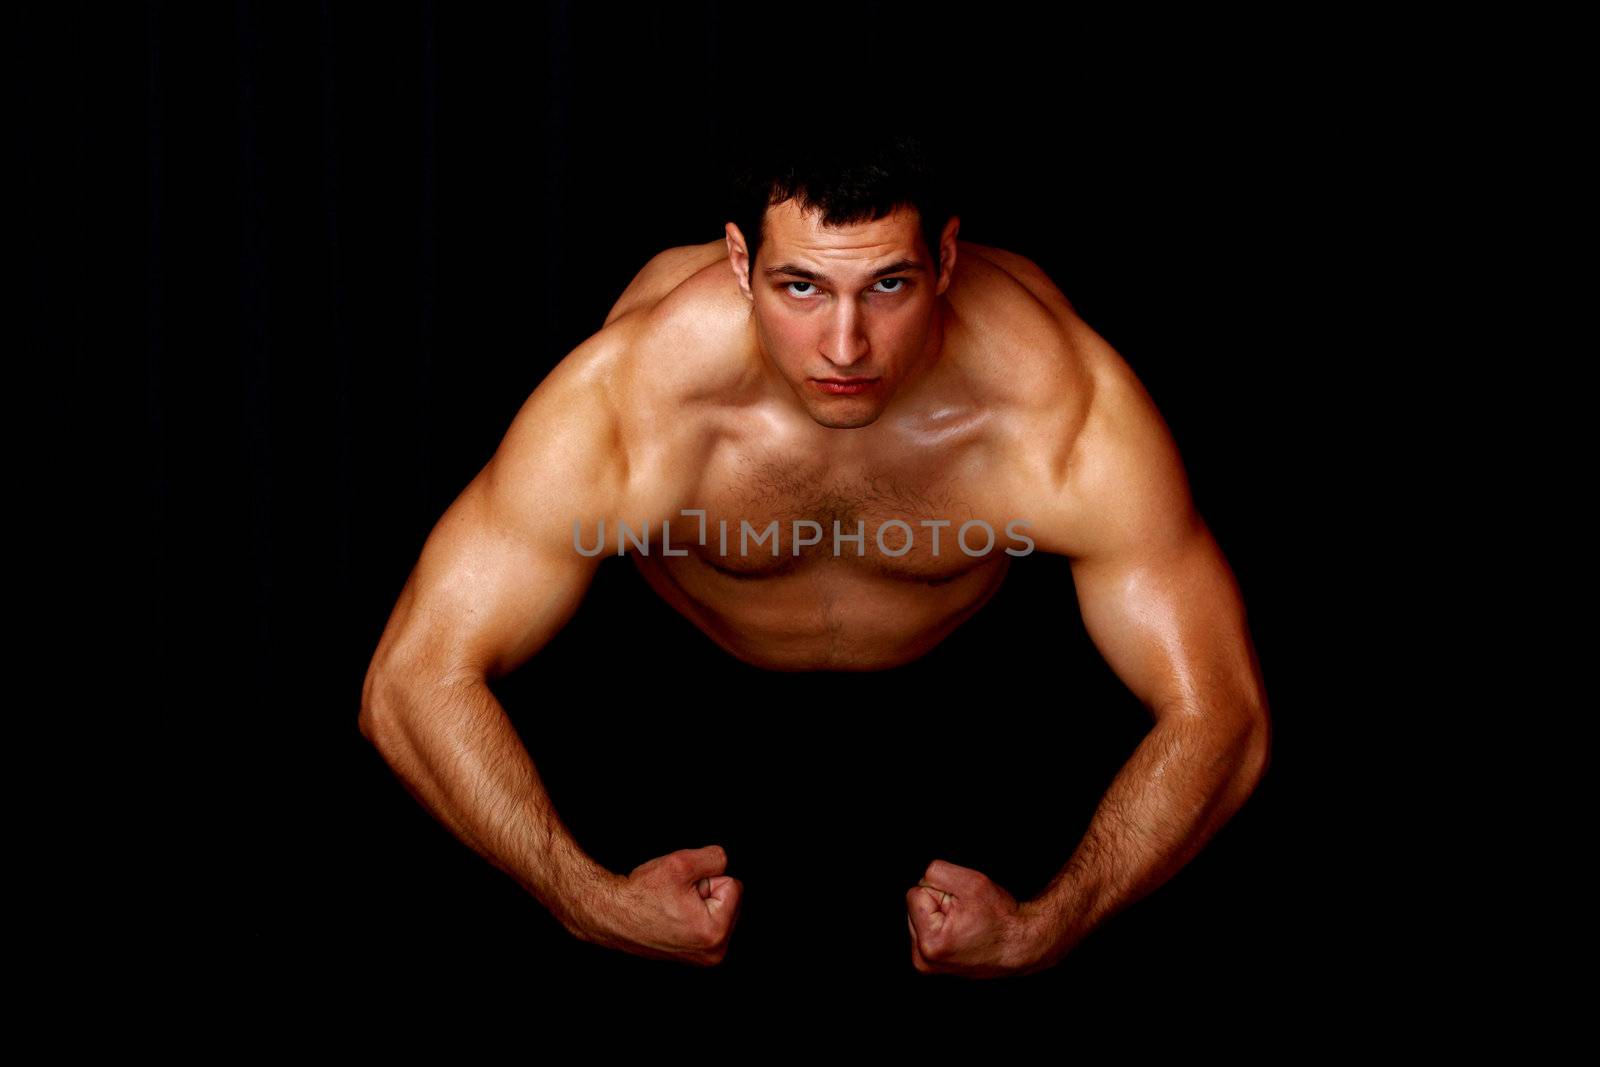 bodybuilder showing his strength, on black background